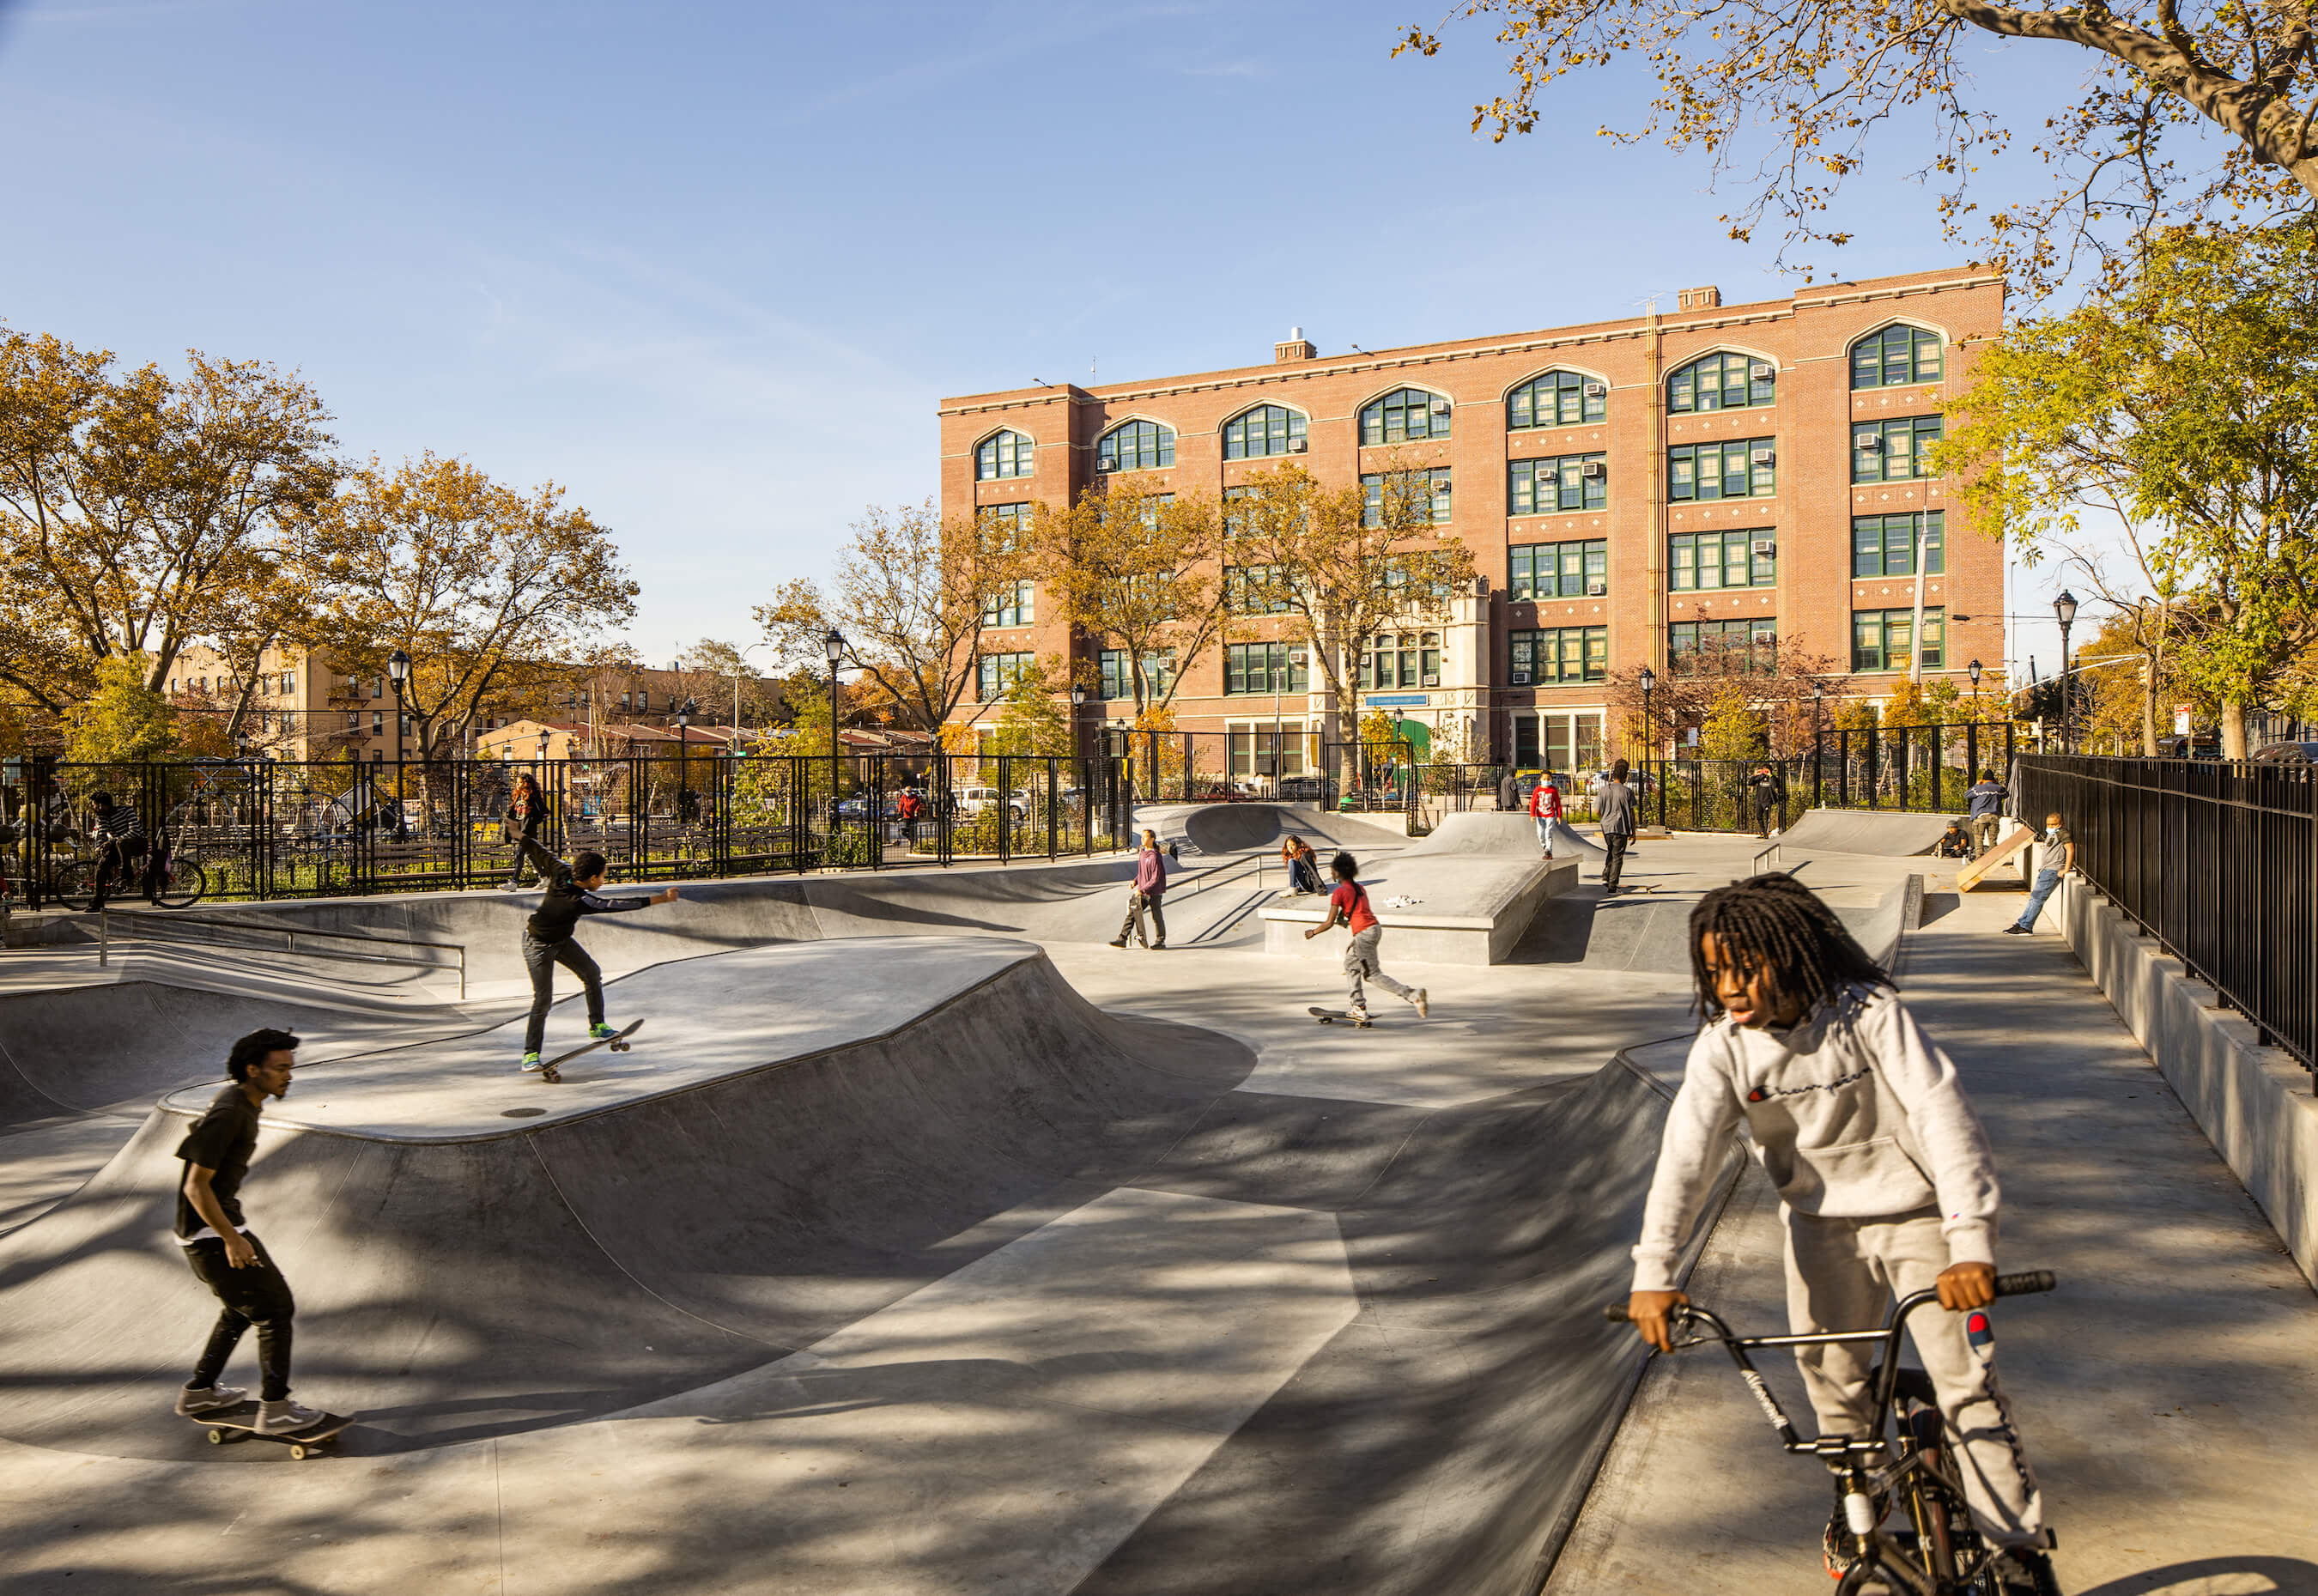 kids skateboard and bmx bike around an urban skate park at betsy head park